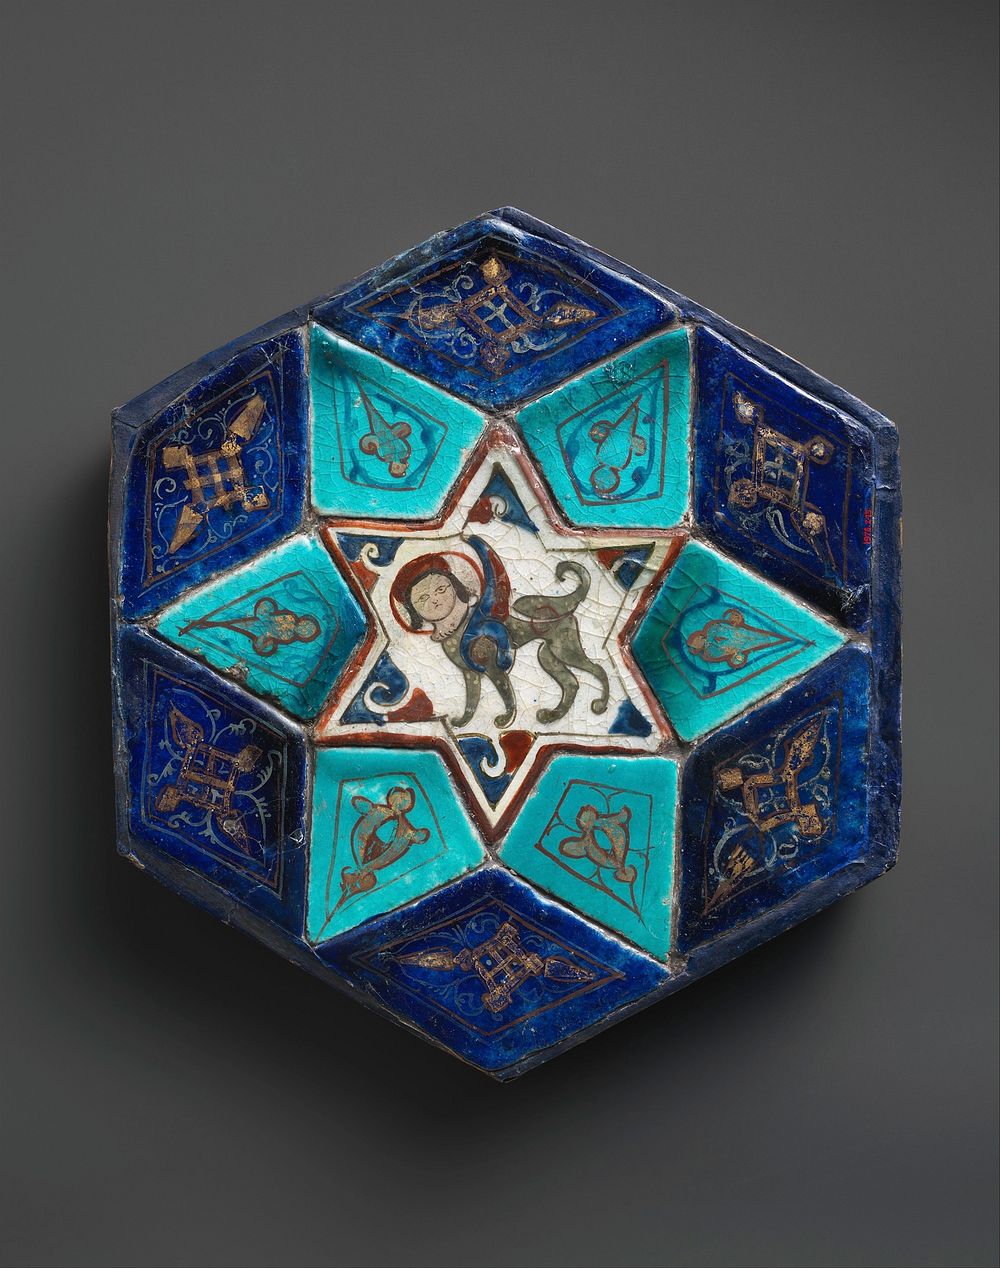 Hexagonal Tile Ensemble with Sphinx, ca. 1160s&ndash;70s